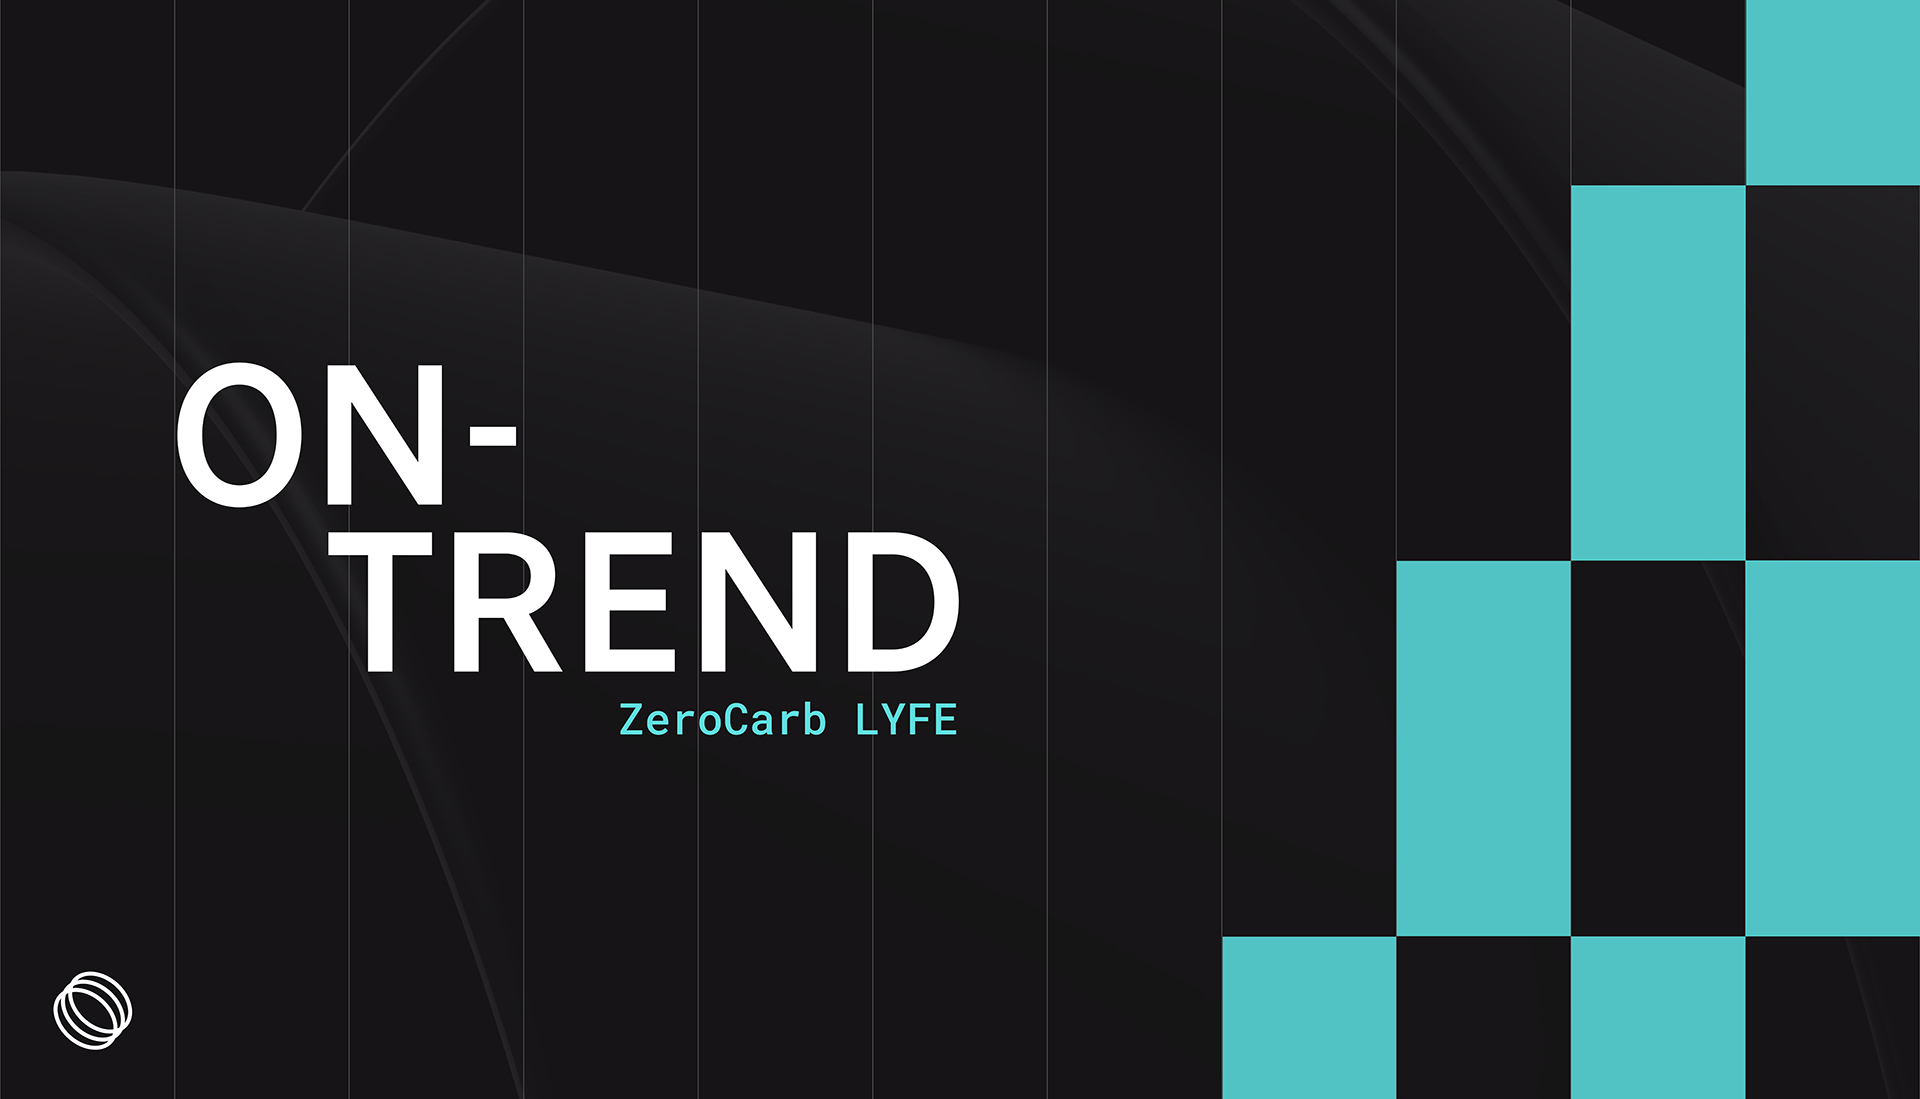 On trend blog about Render Capital Portfolio Company ZeroCarb Lyfe